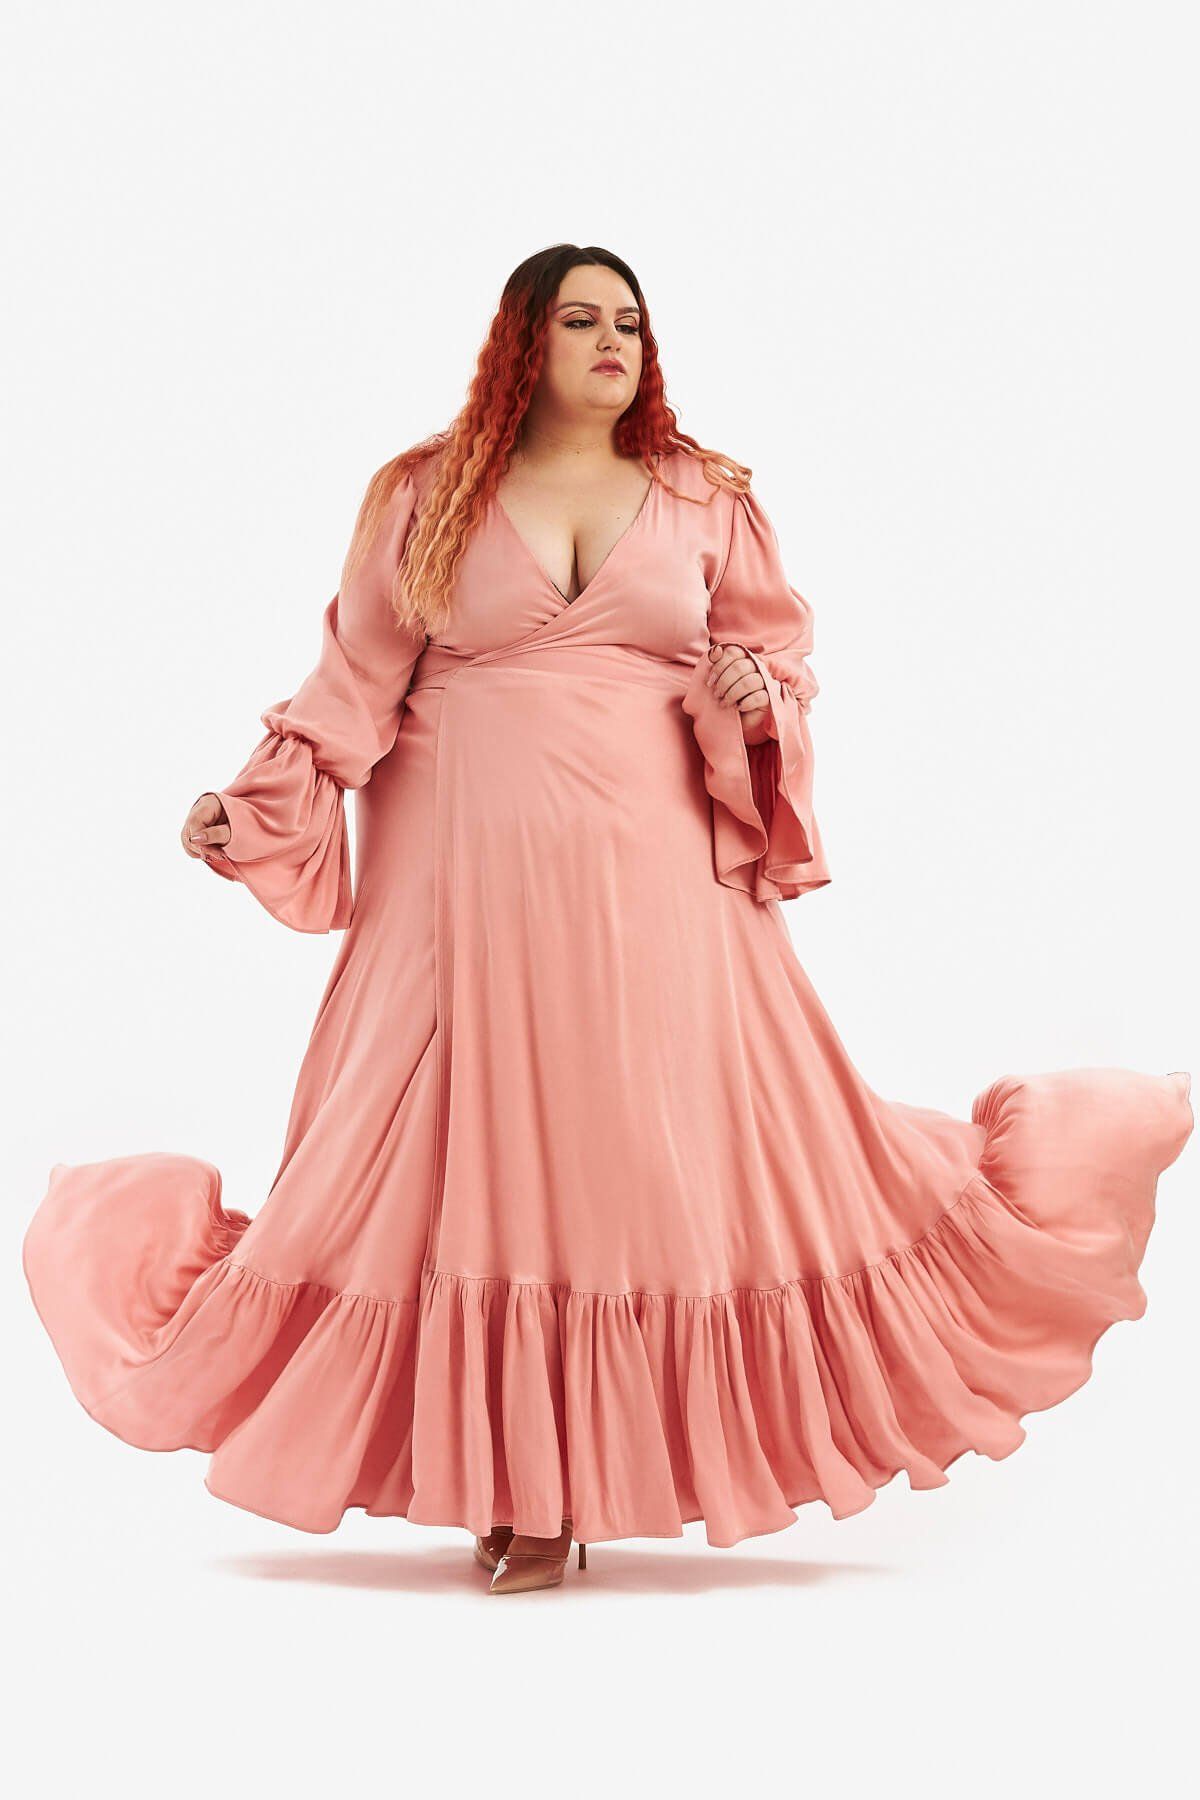 Undskyld mig Europa Guinness 15 best plus-size bridesmaid dresses 2021 - Curve Editor picks